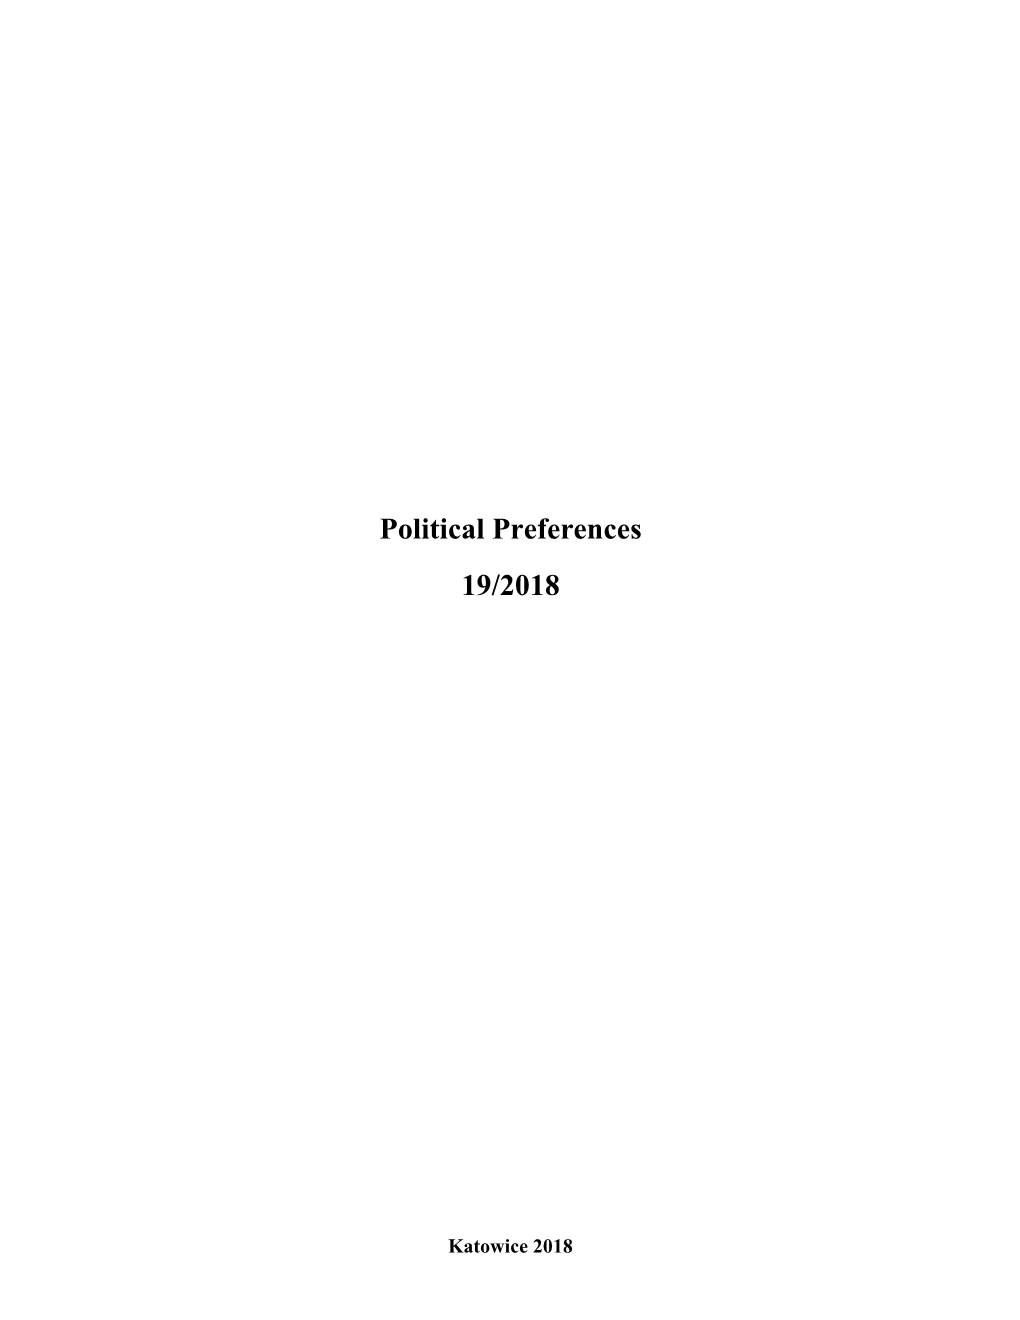 Political Preferences 19/2018